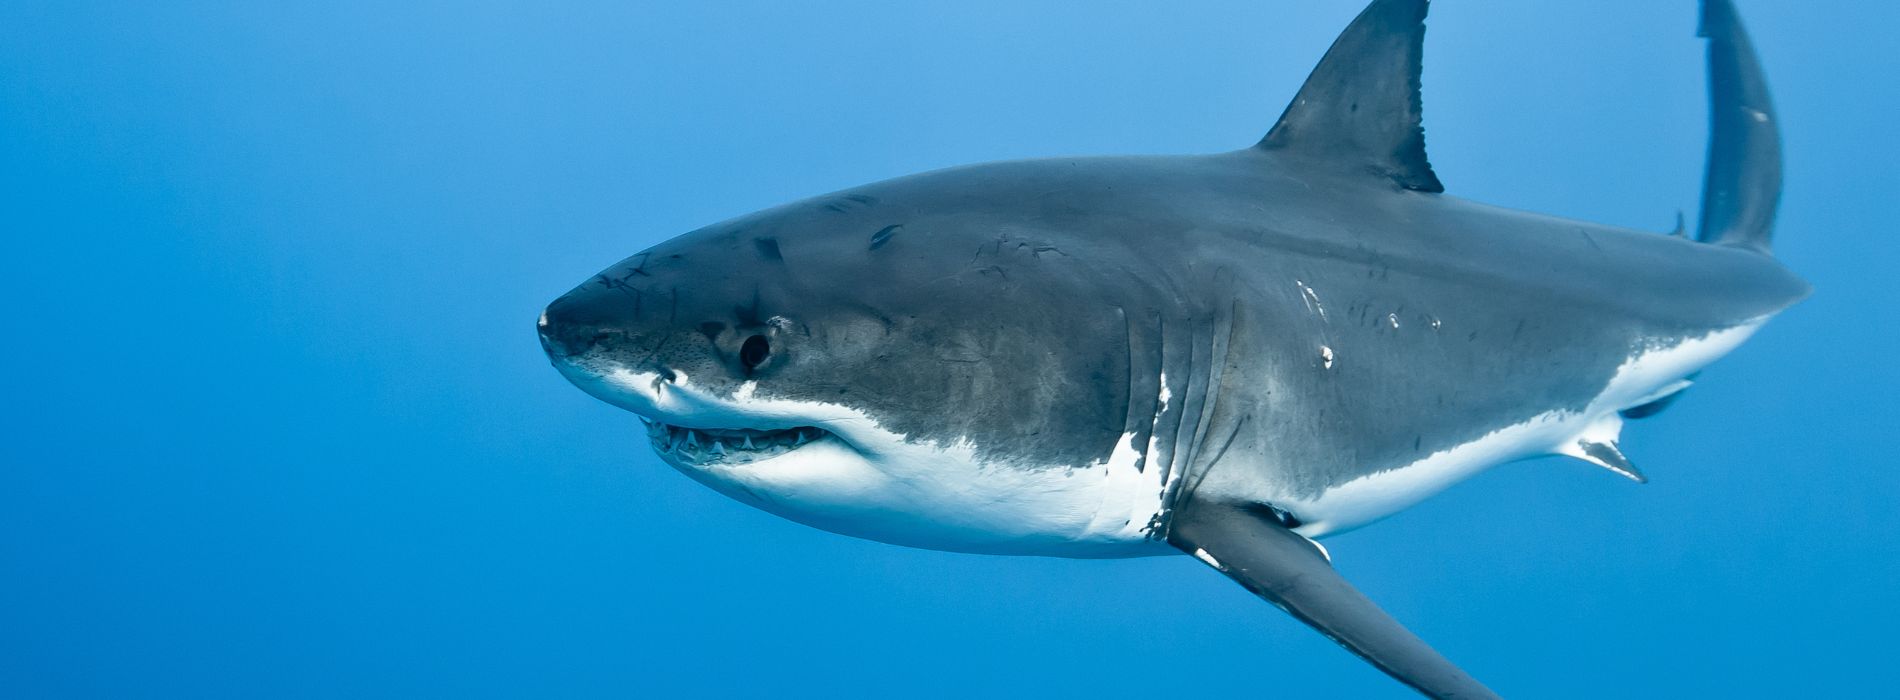 shark-close-up-encounter